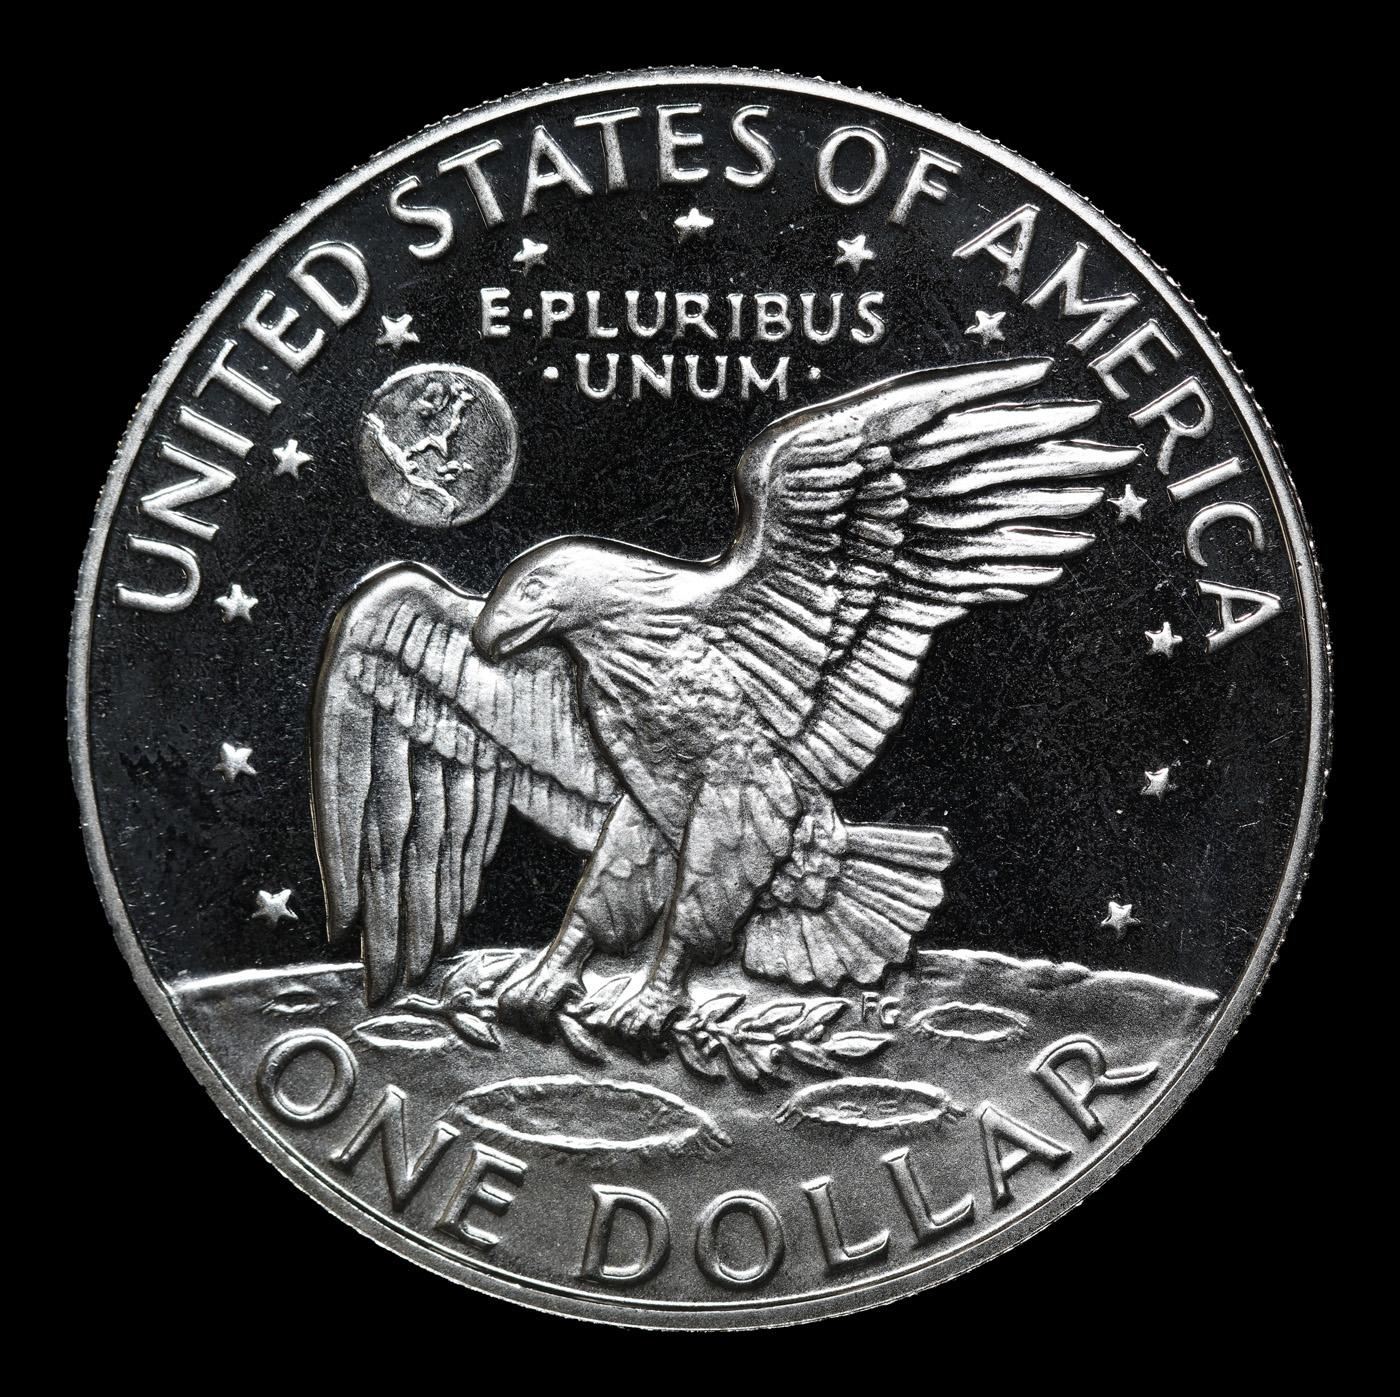 Proof ***Auction Highlight*** 1973-s Silver Eisenhower Dollar 1 Graded pr69+ dcam By SEGS (fc)